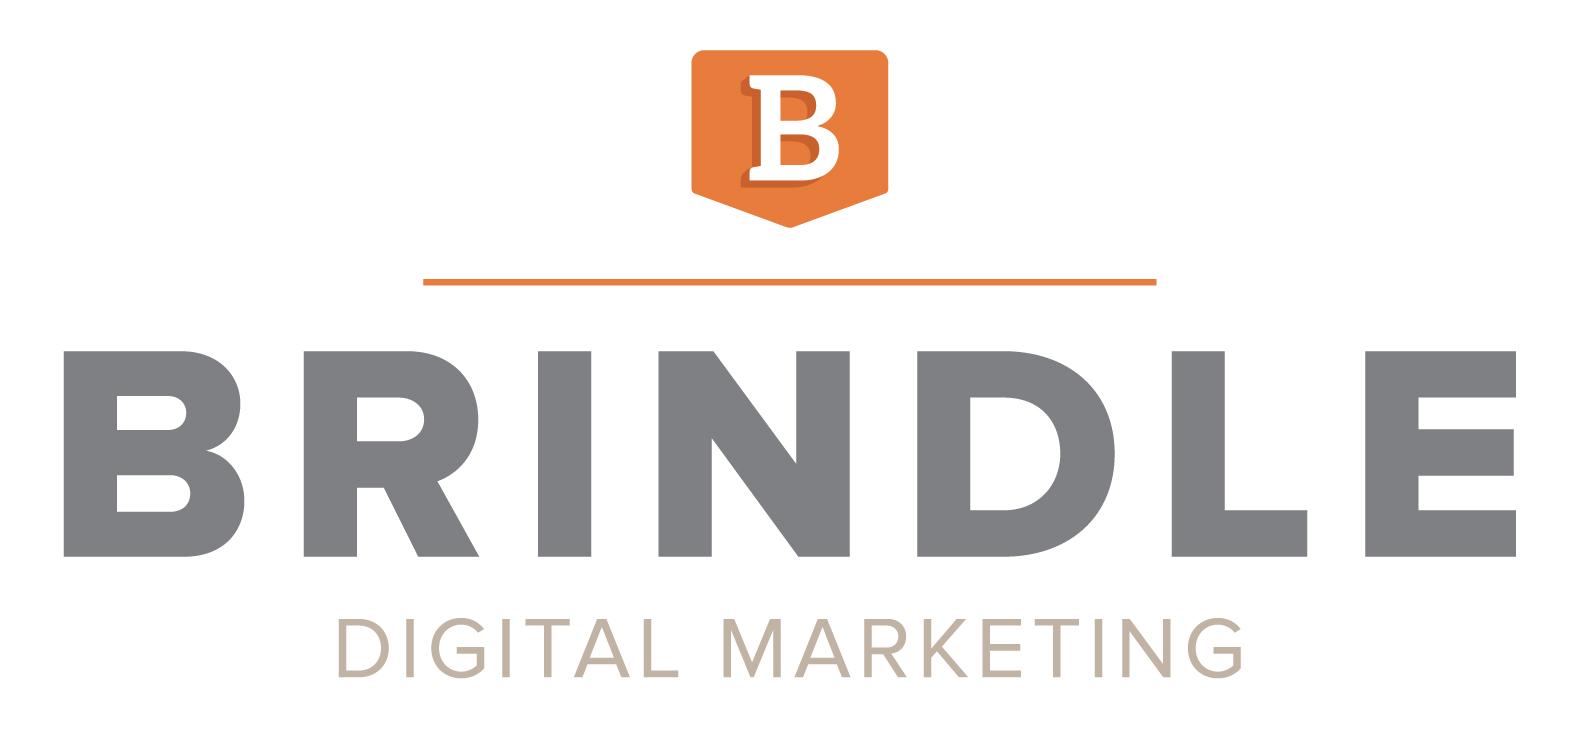 Brindle Digital Marketing profile on Qualified.One